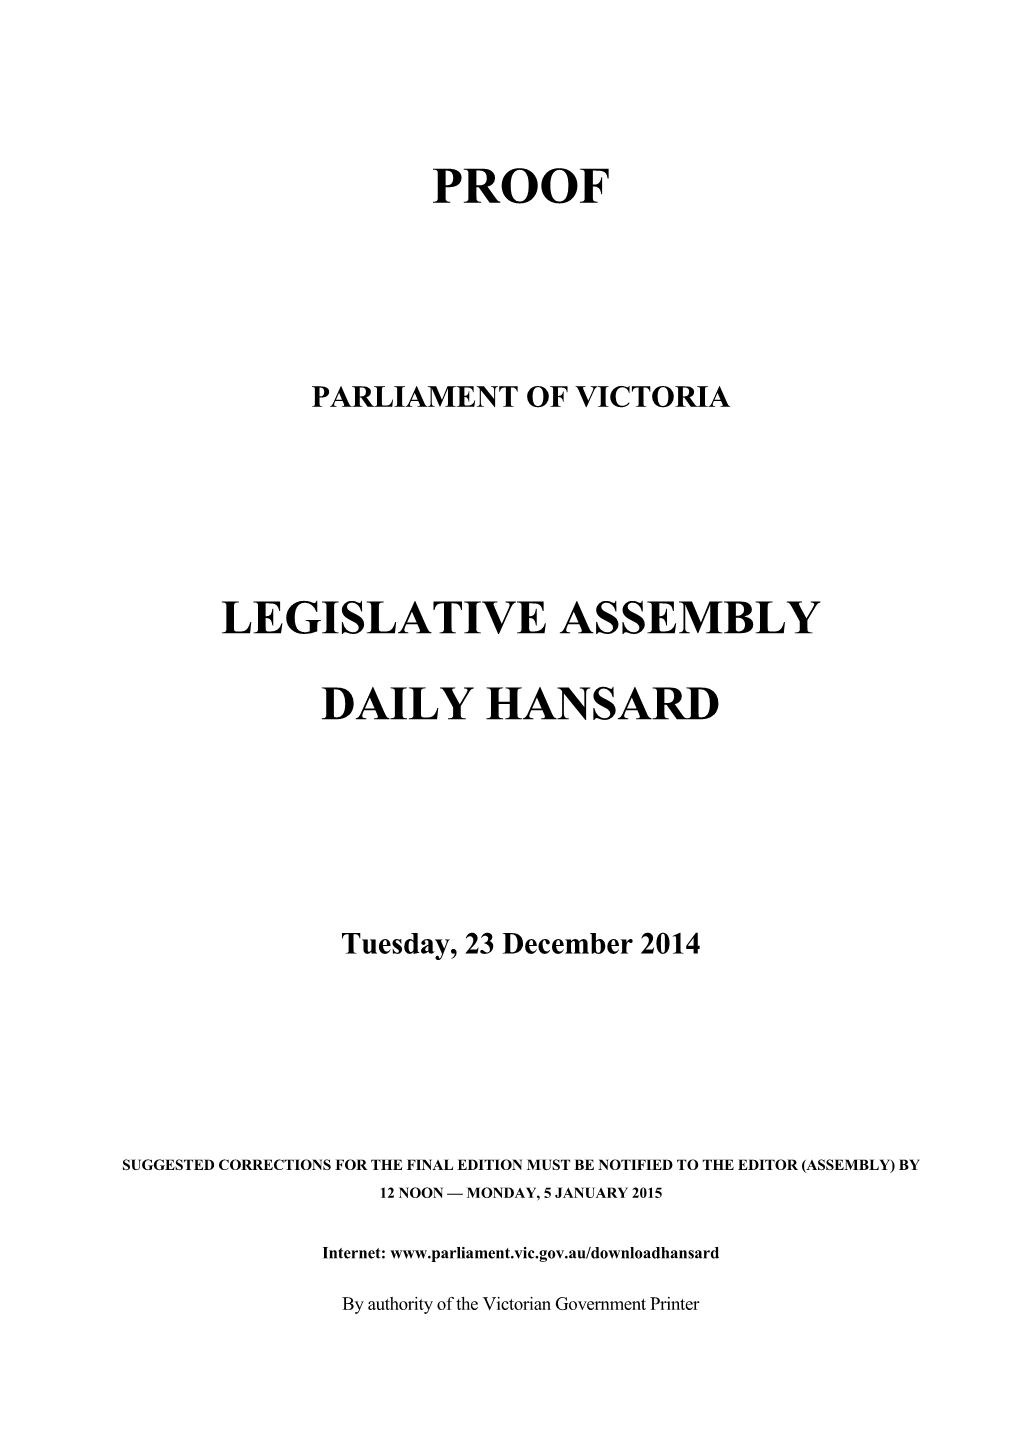 Legislative Assembly Daily Hansard